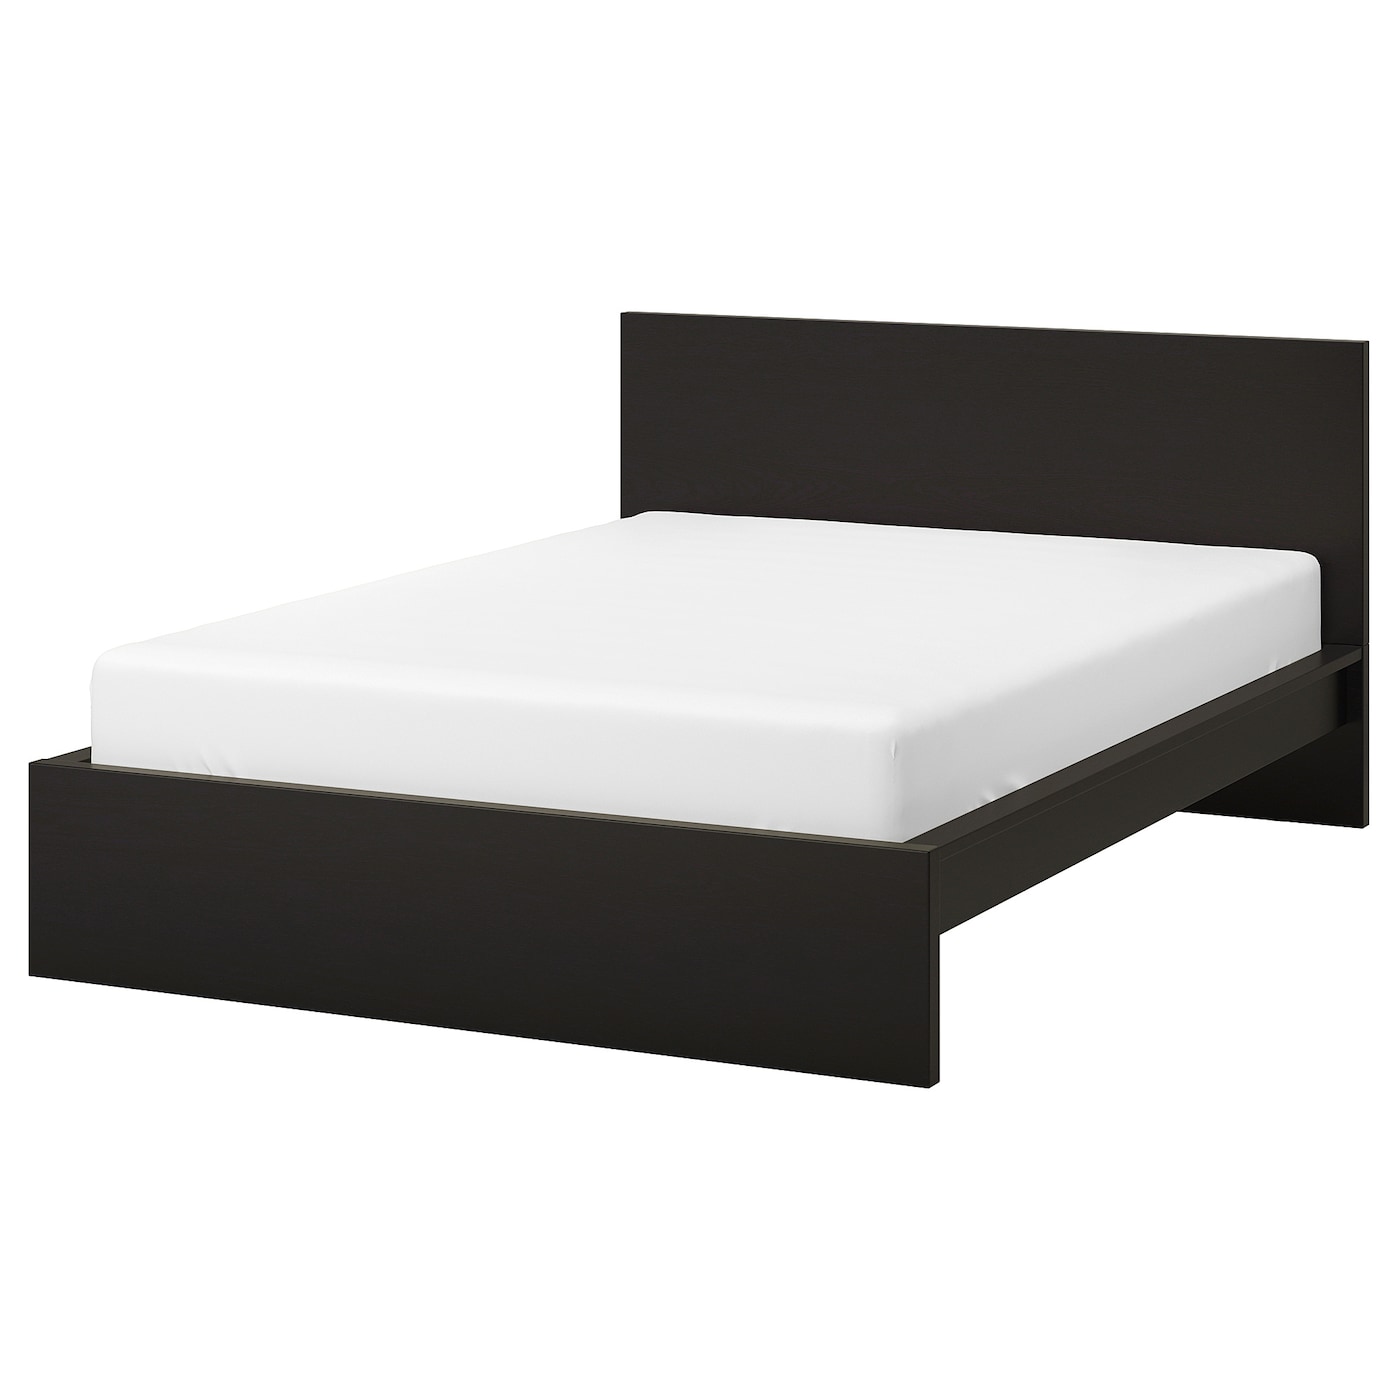 Каркас кровати - IKEA MALM, 200х160 см, черный, МАЛЬМ ИКЕА